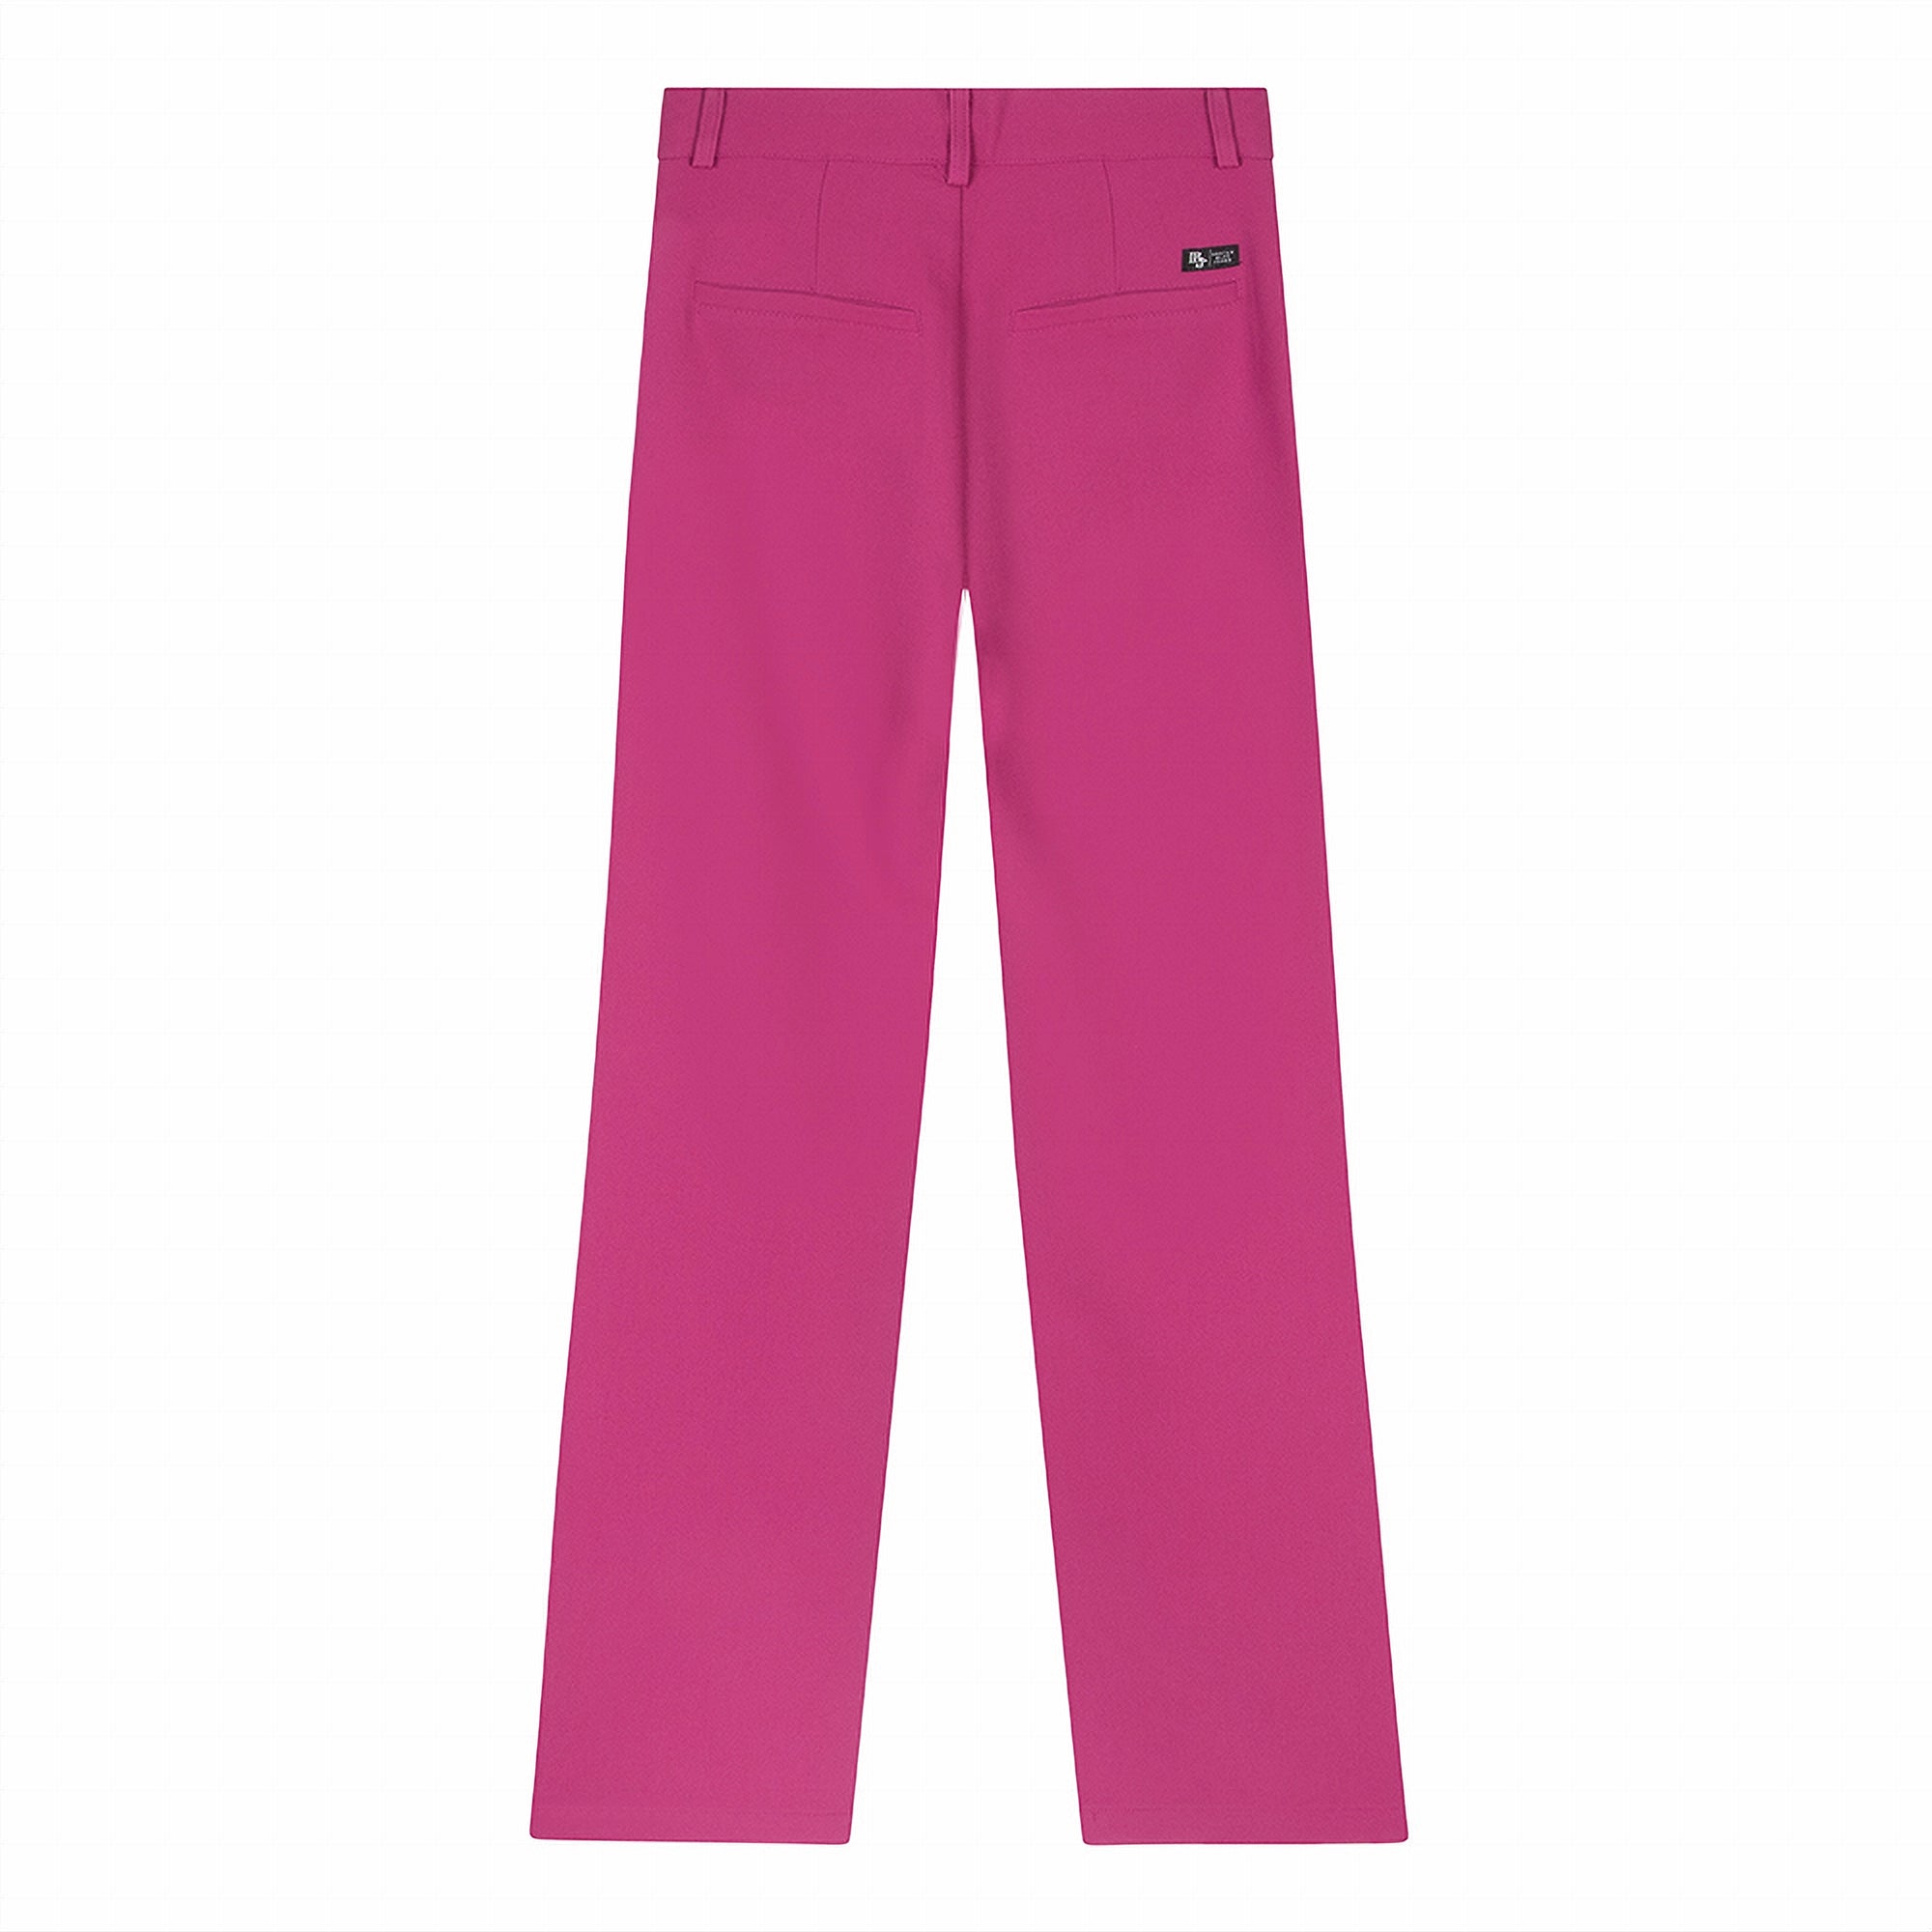 Meisjes Wide Pants Chino van Indian Blue Jeans in de kleur Festival Pink in maat 176.